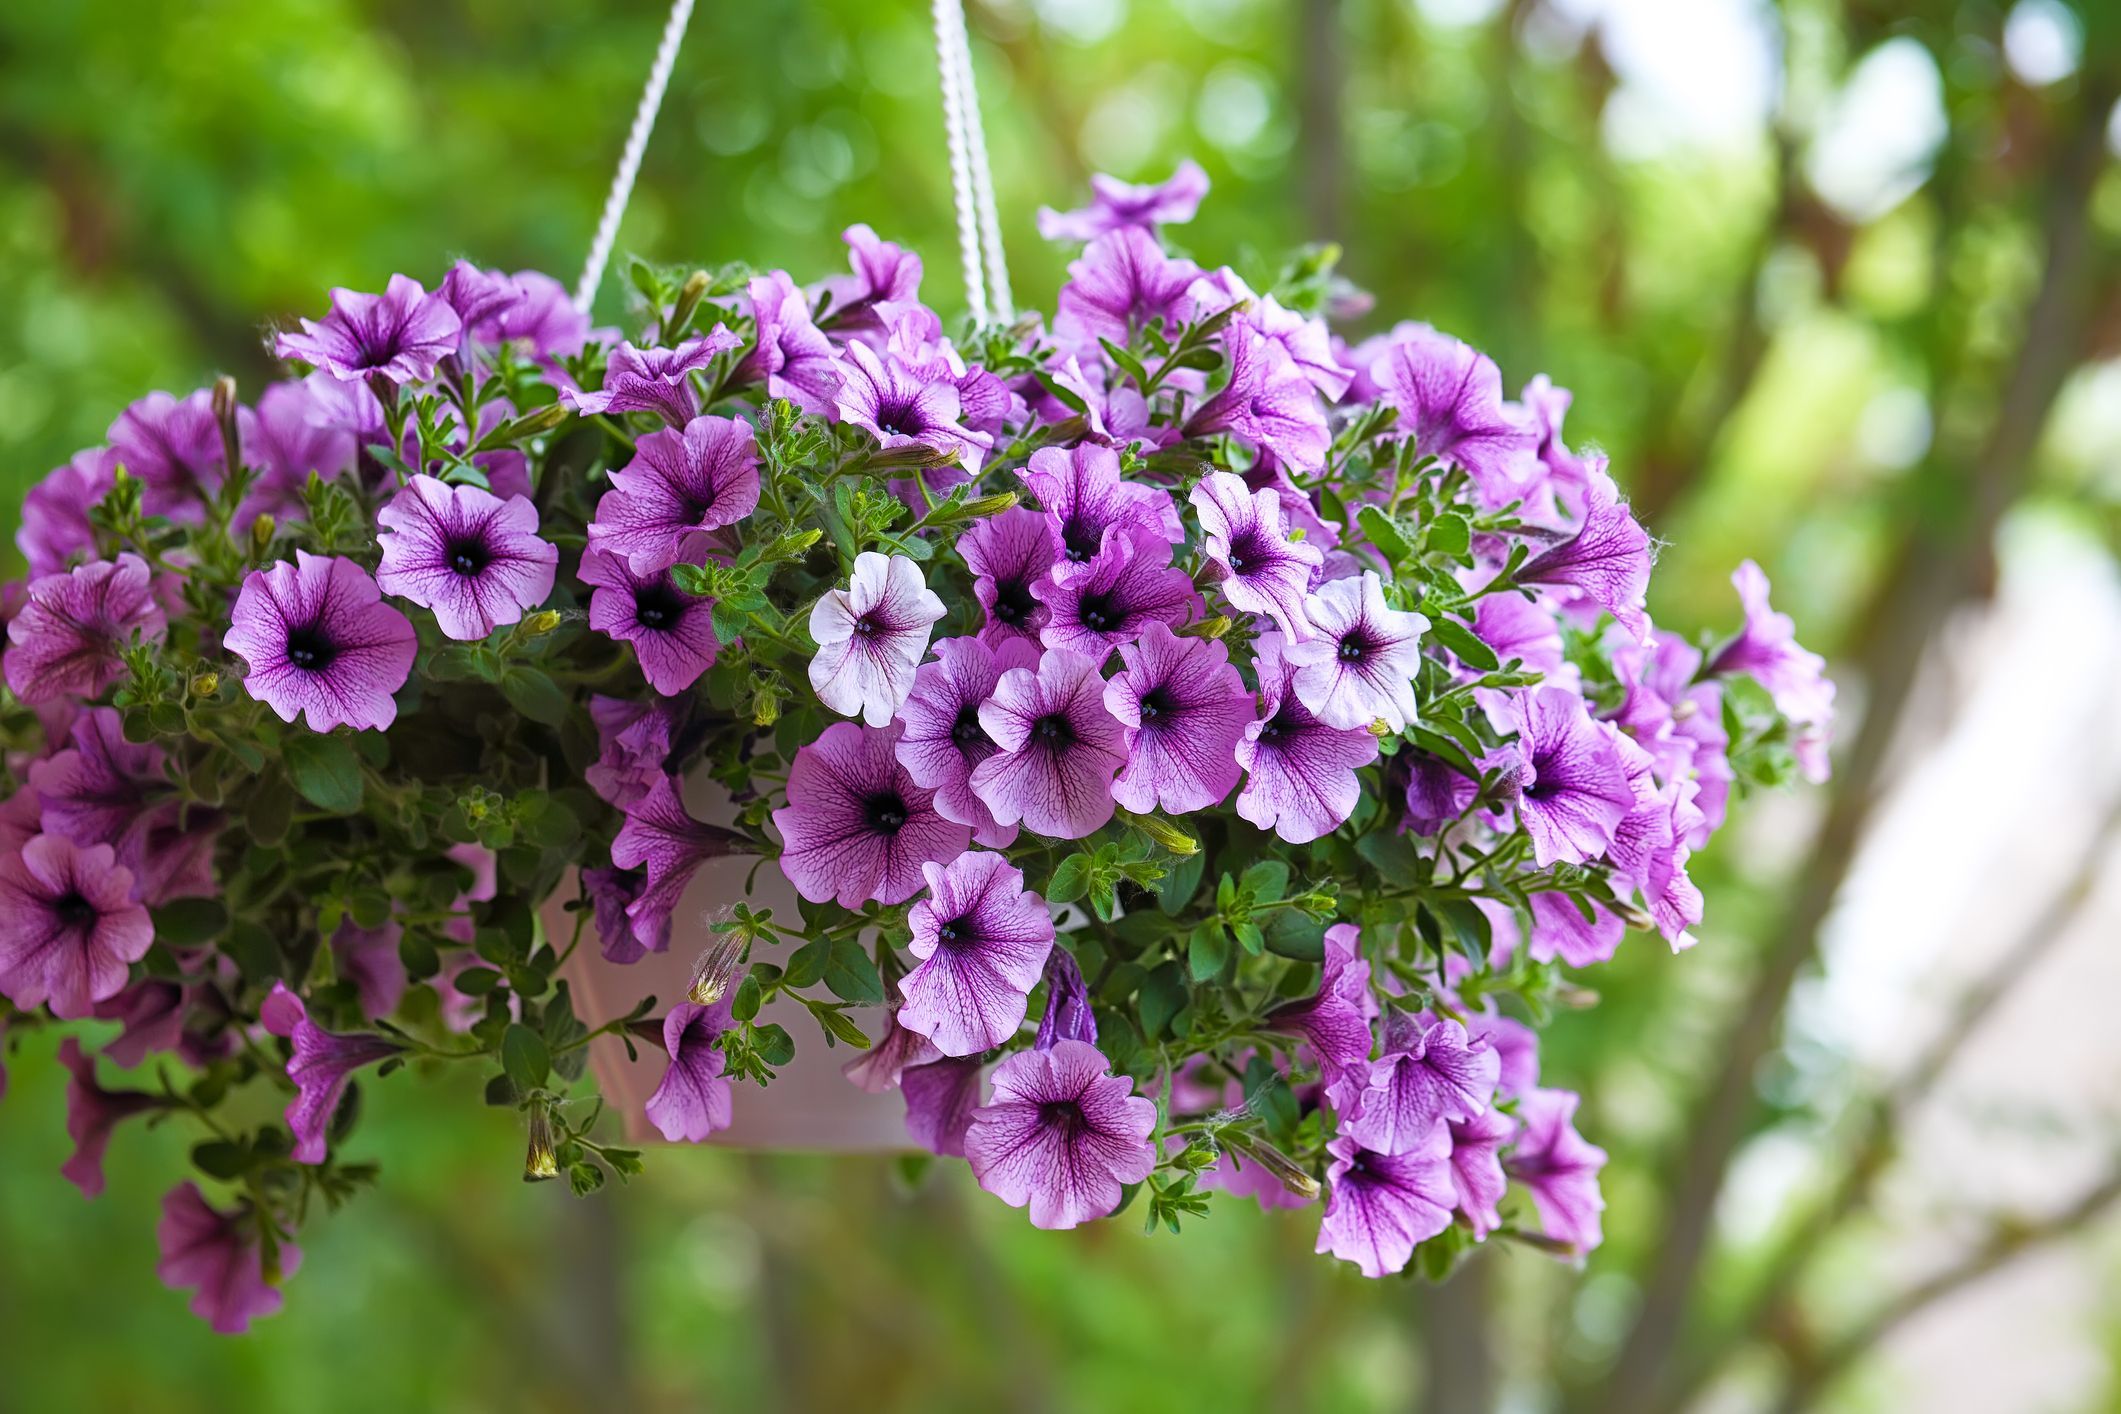 https://hips.hearstapps.com/hmg-prod/images/outdoor-hanging-plants-petunia-flowers-1655825453.jpeg